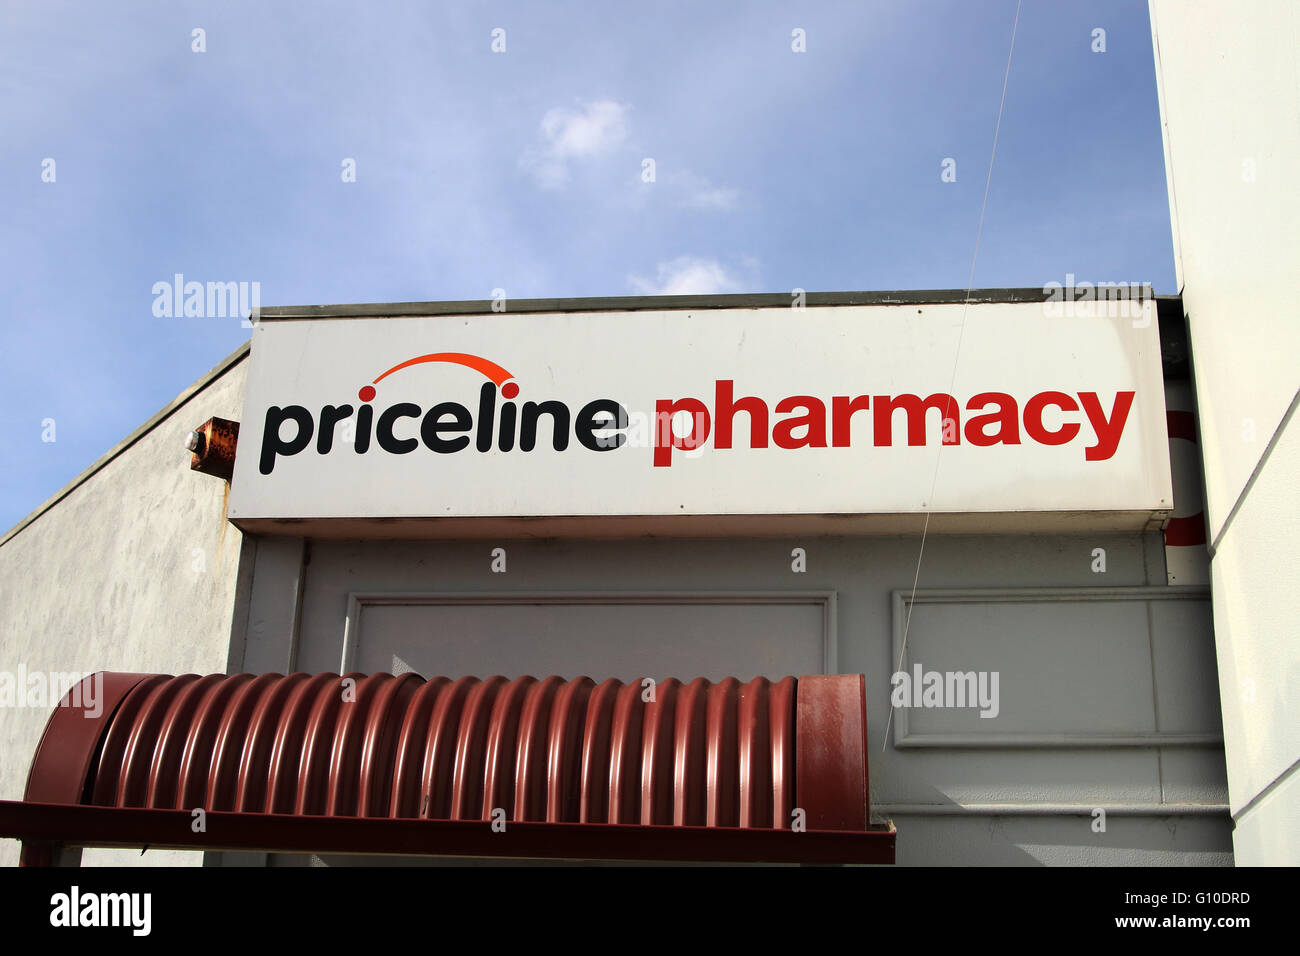 Priceline Farmacia - farmacia minorista australiano y embellecer Foto de stock